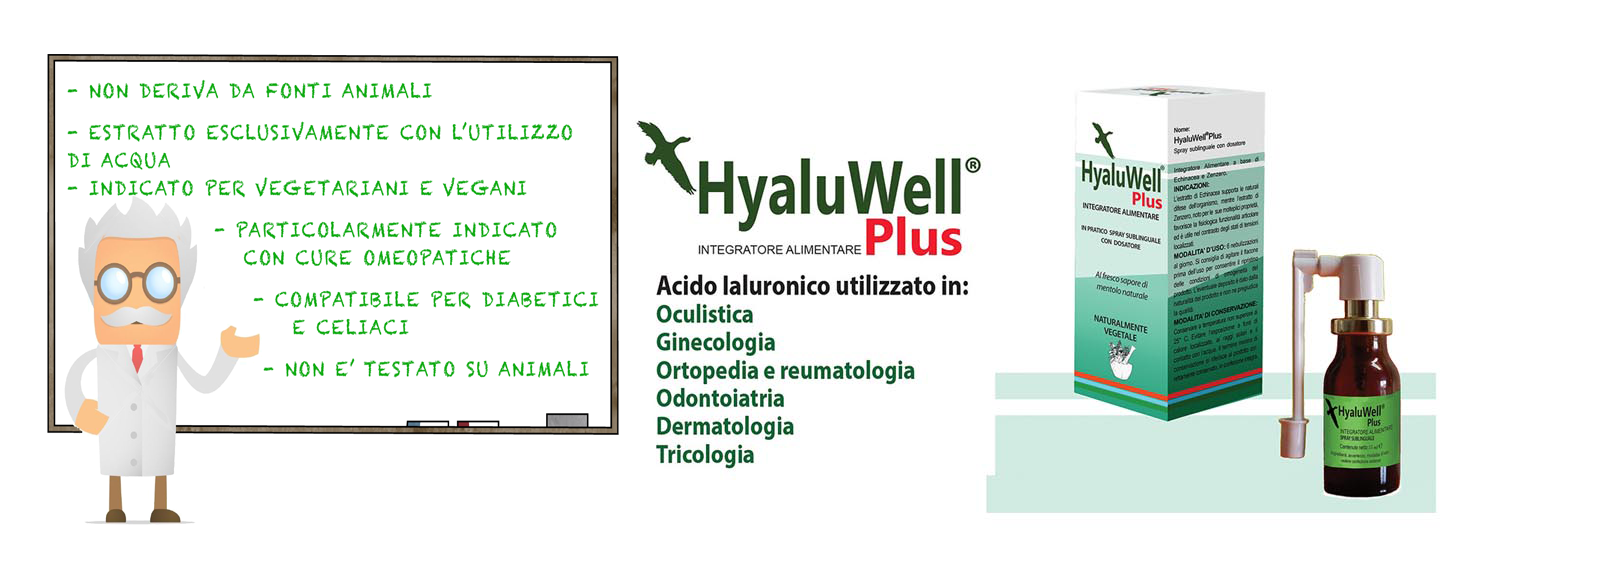 HyaluWell Plus slide 5